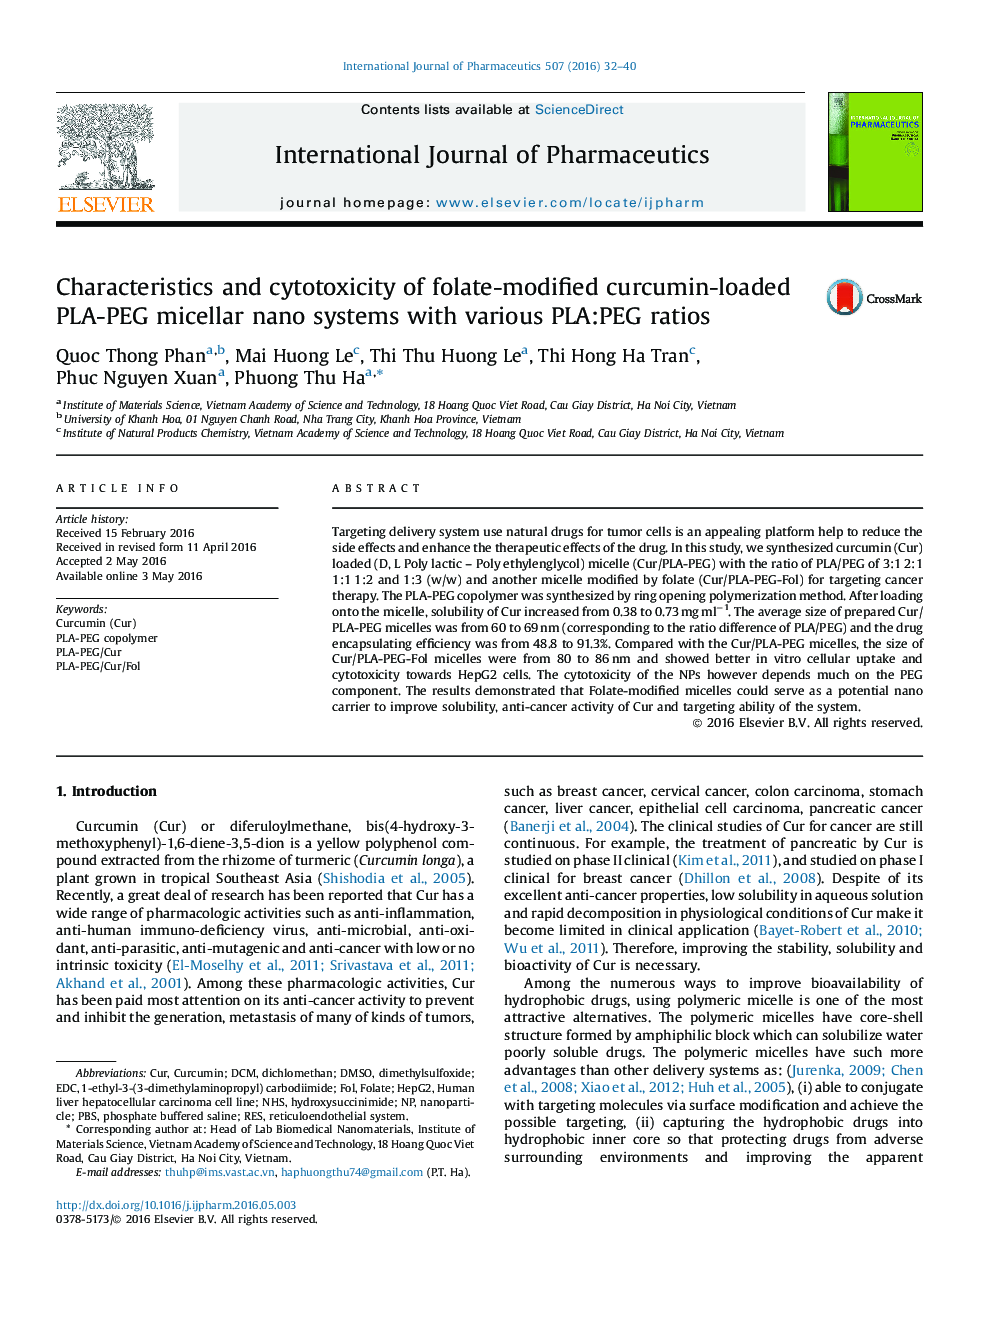 Characteristics and cytotoxicity of folate-modified curcumin-loaded PLA-PEG micellar nano systems with various PLA:PEG ratios